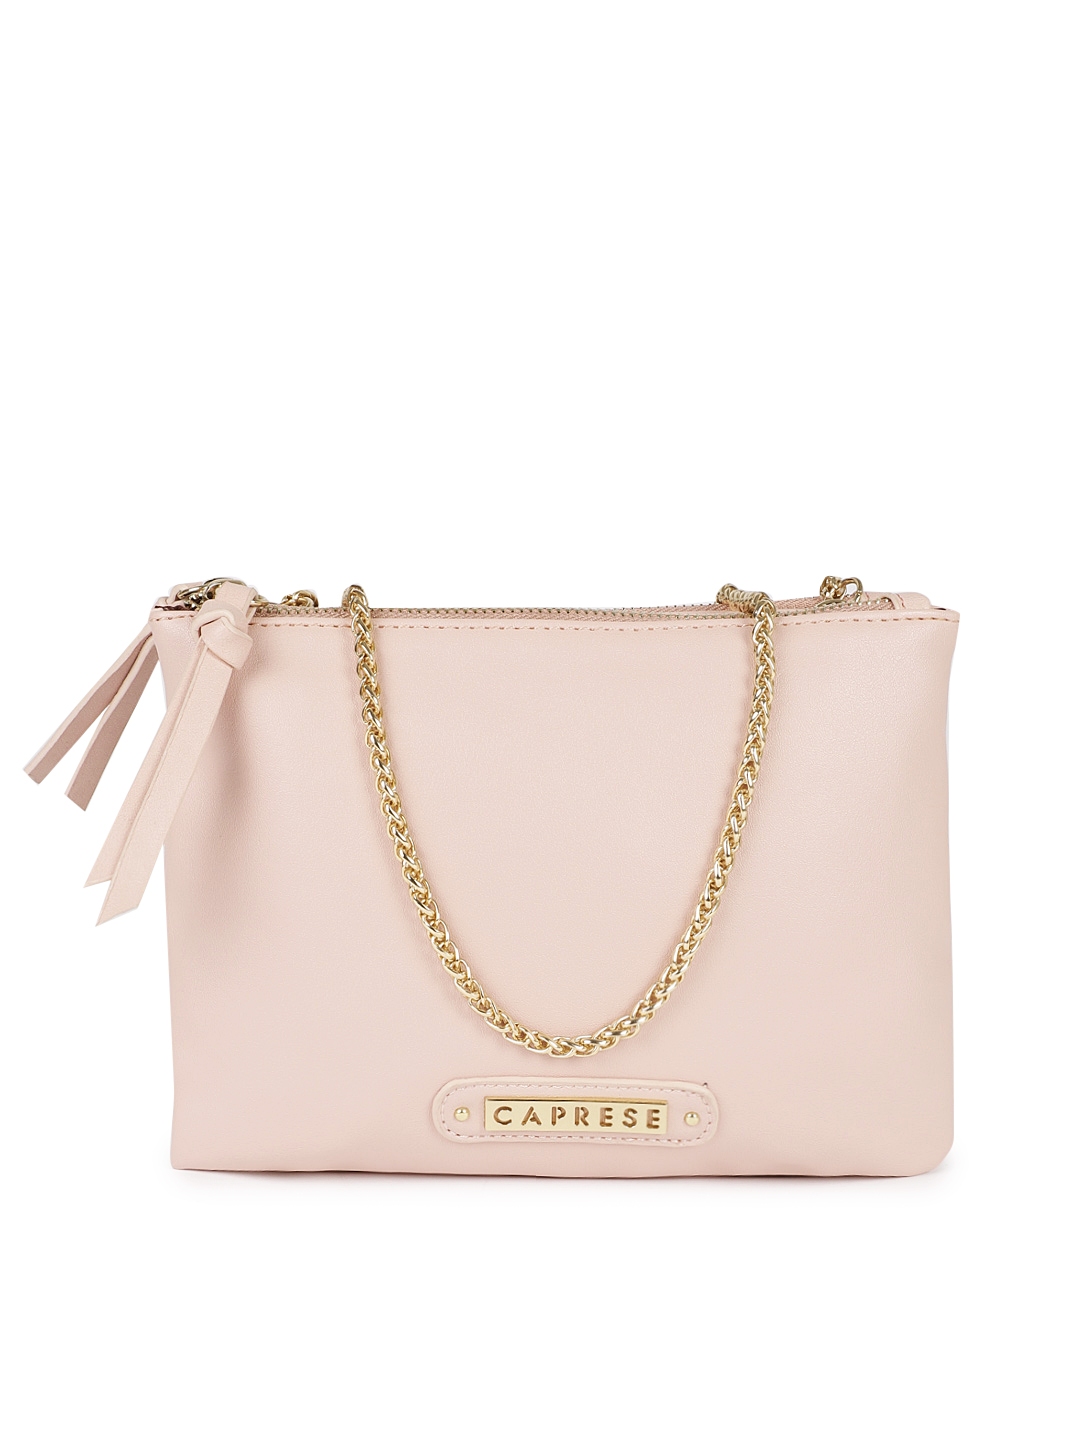 Caprese Women's Sling Bag (Blush) : Amazon.in: Fashion